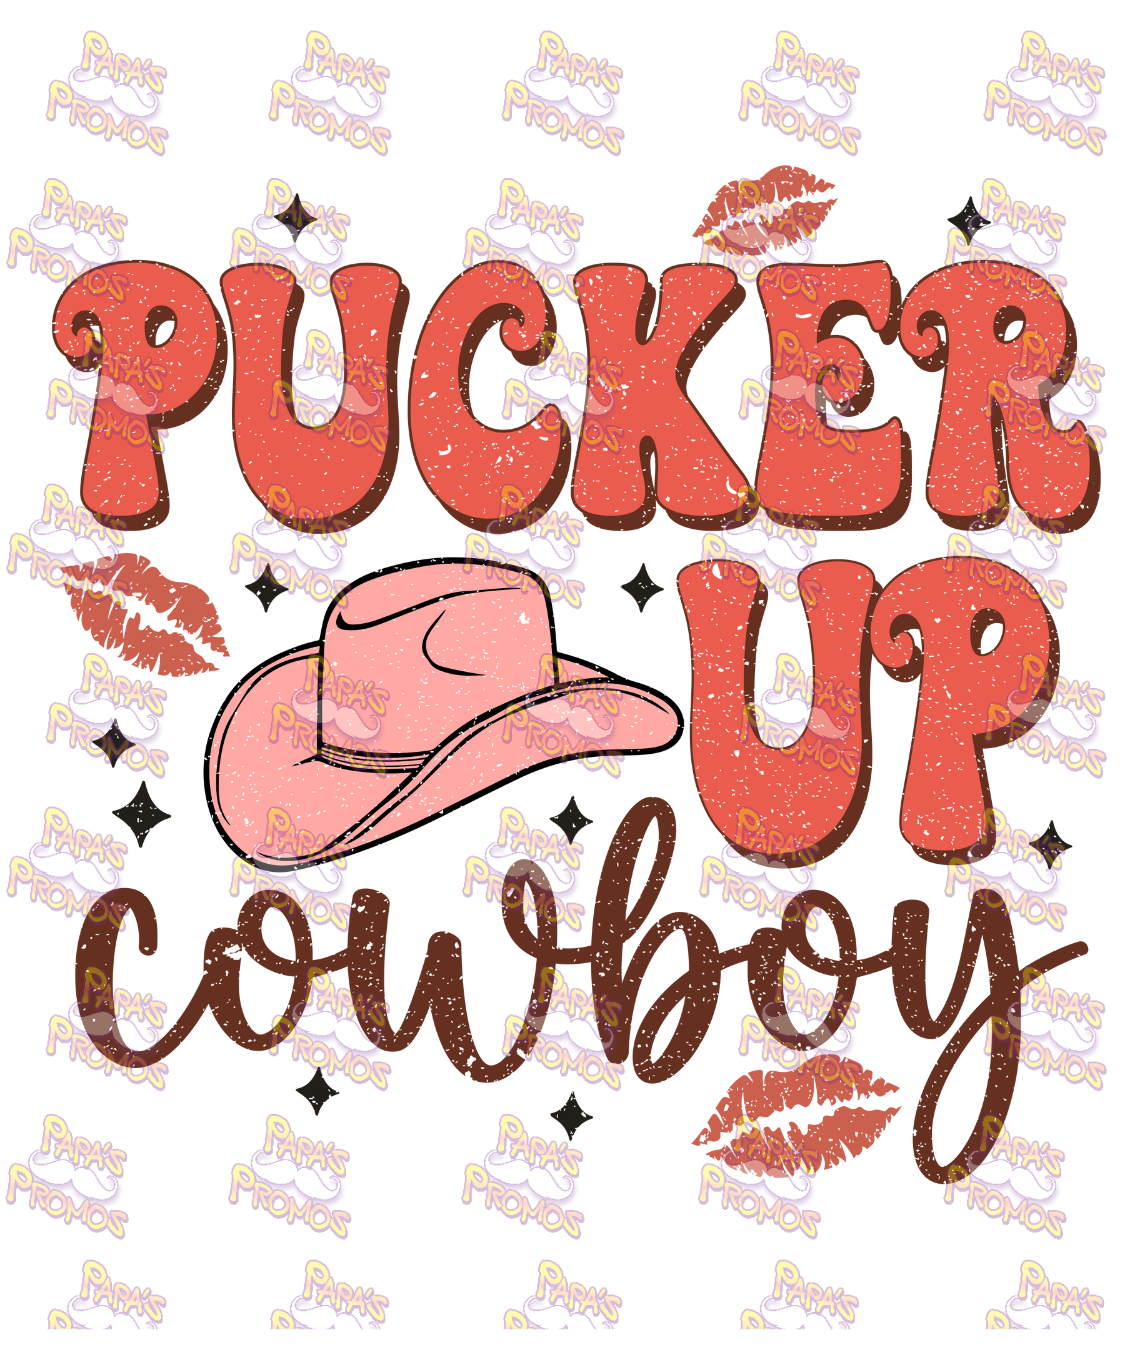 Pucker Up Cowboy Damn Good Decal